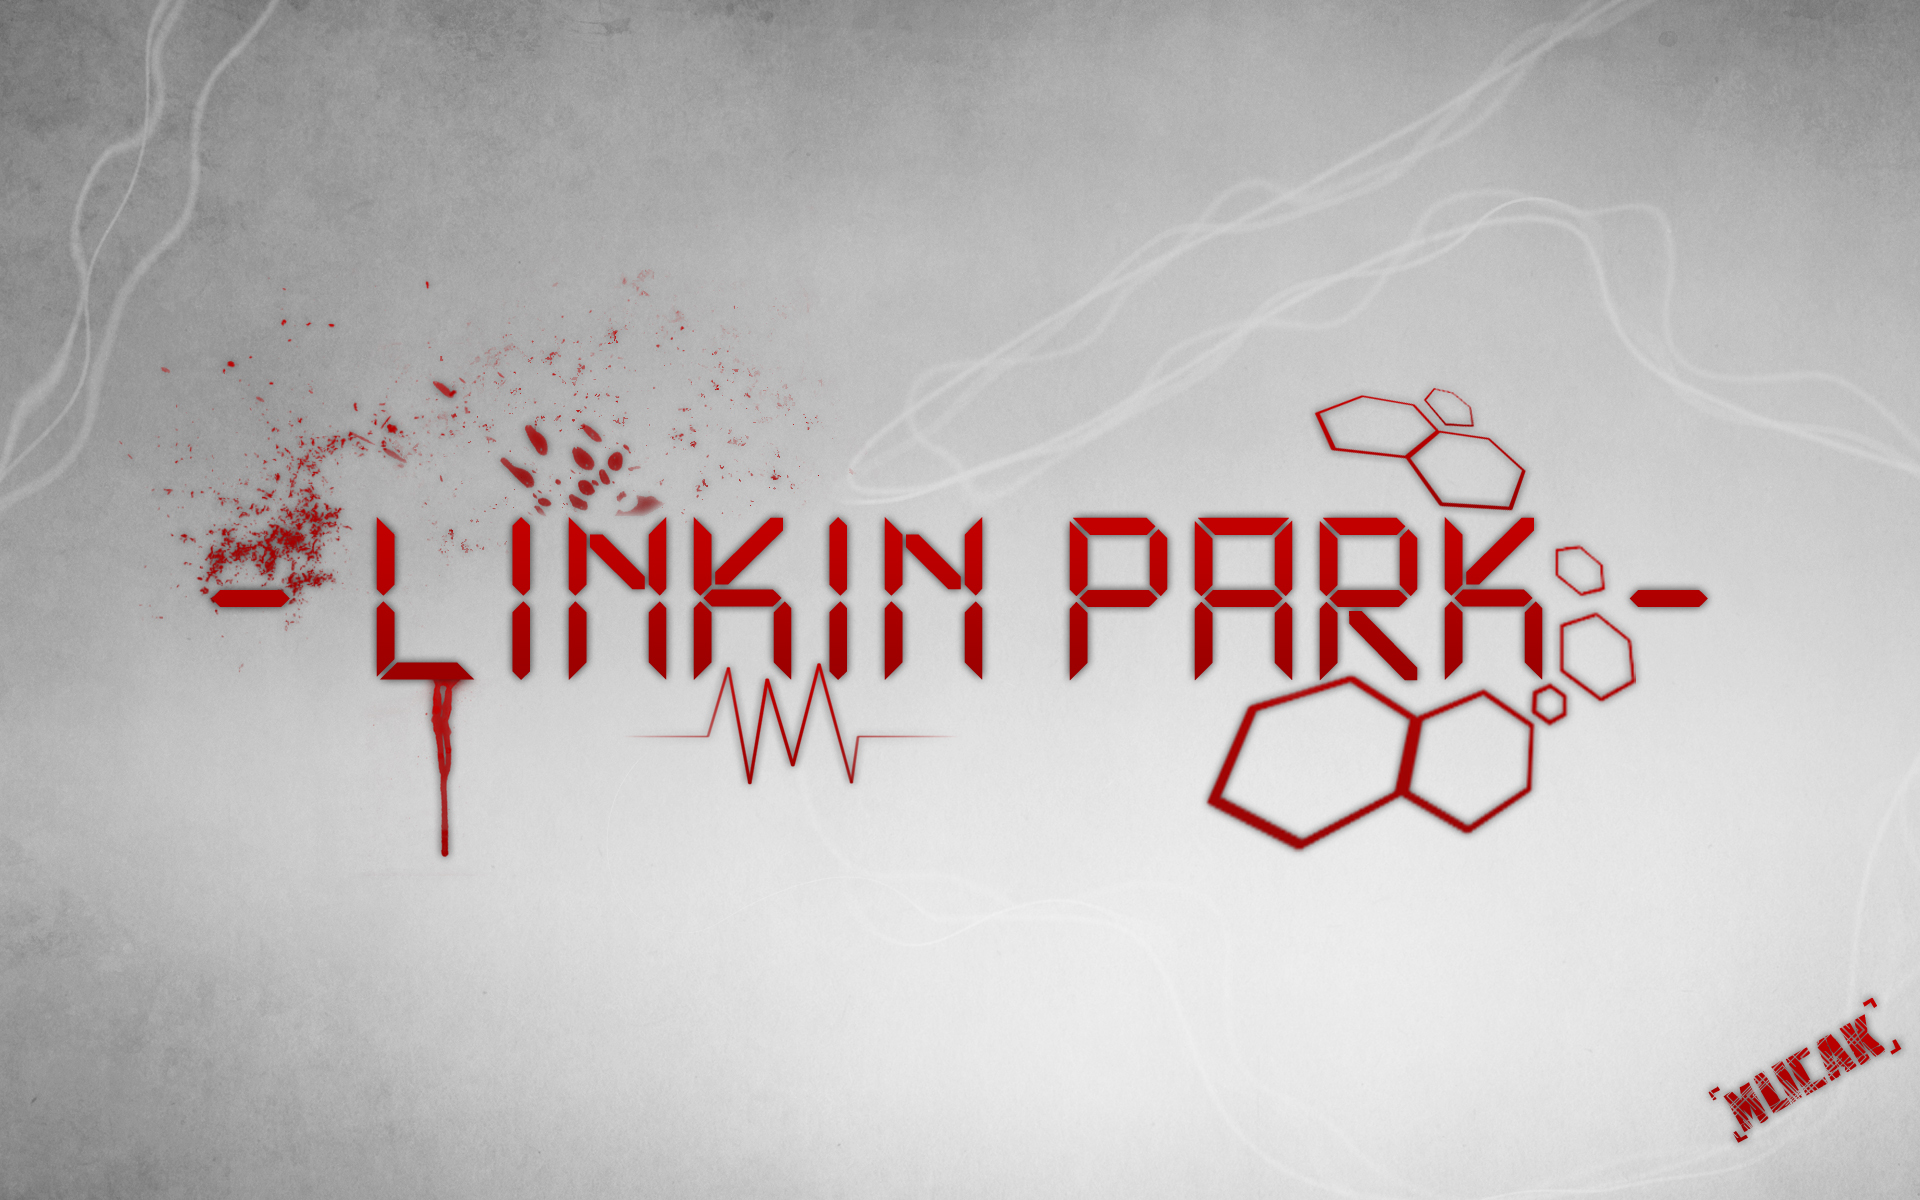 Linkin Park - desktop wallpaper